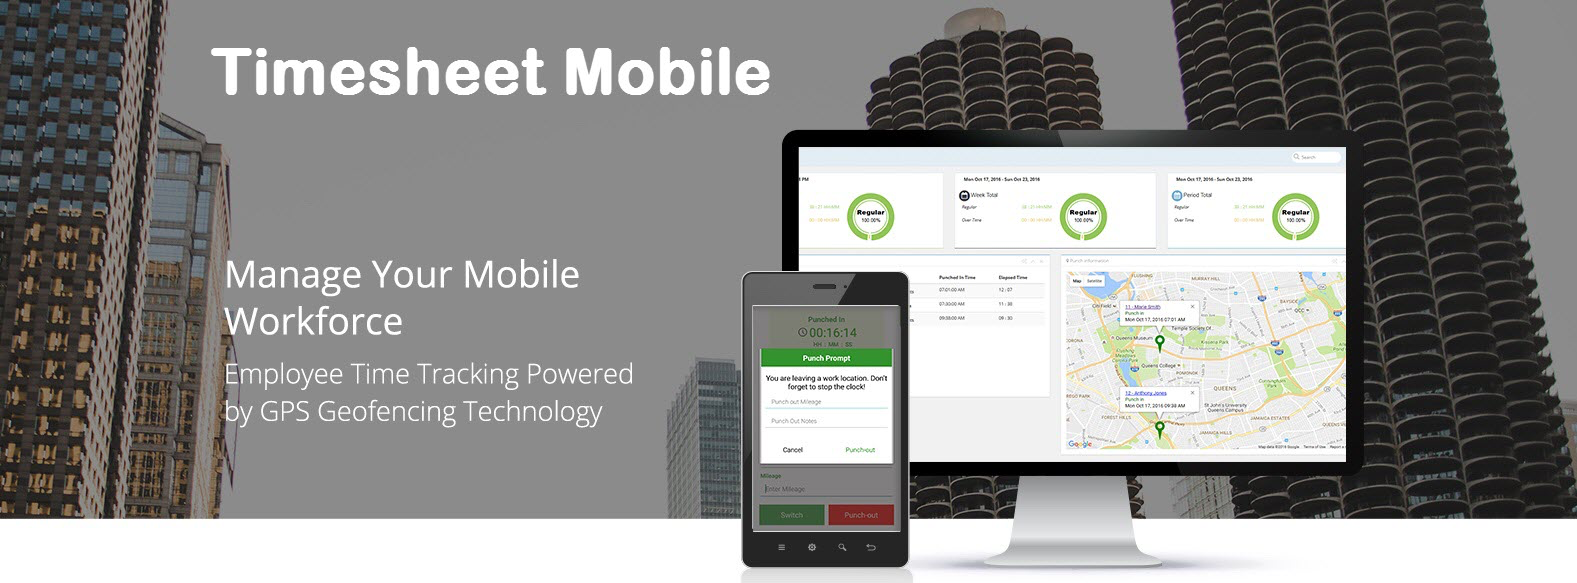 timesheet mobile workforce management app